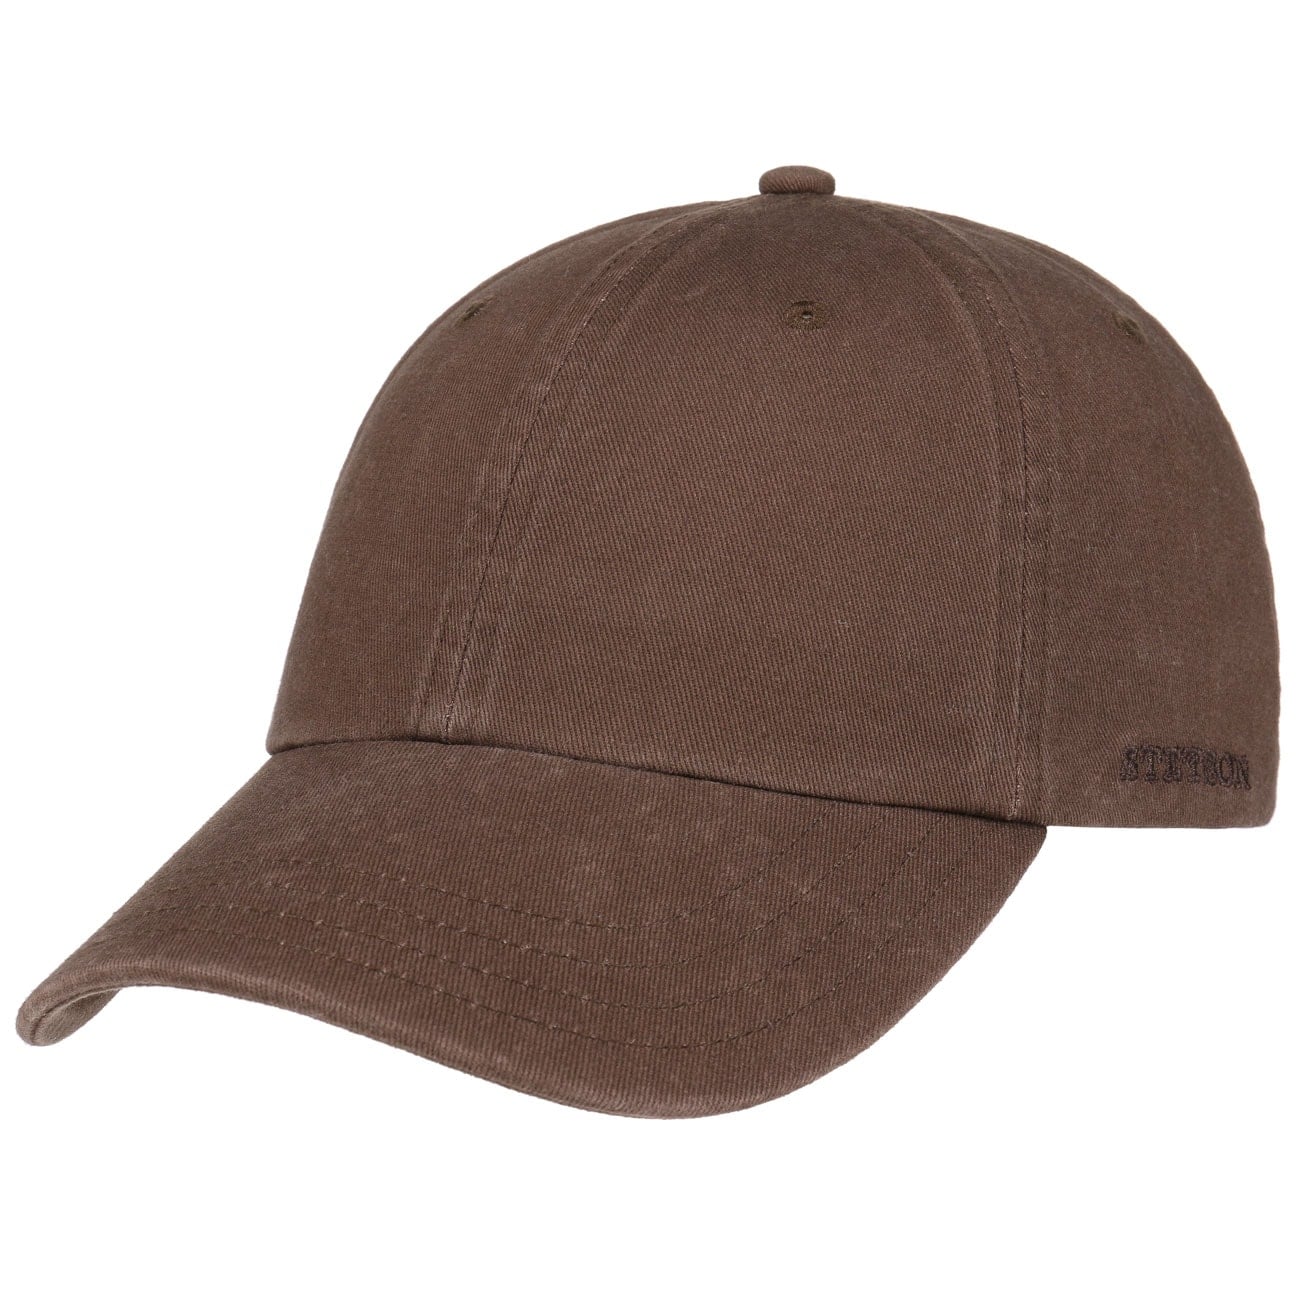 Stetson 7711101 6 Rector brown baseball cap